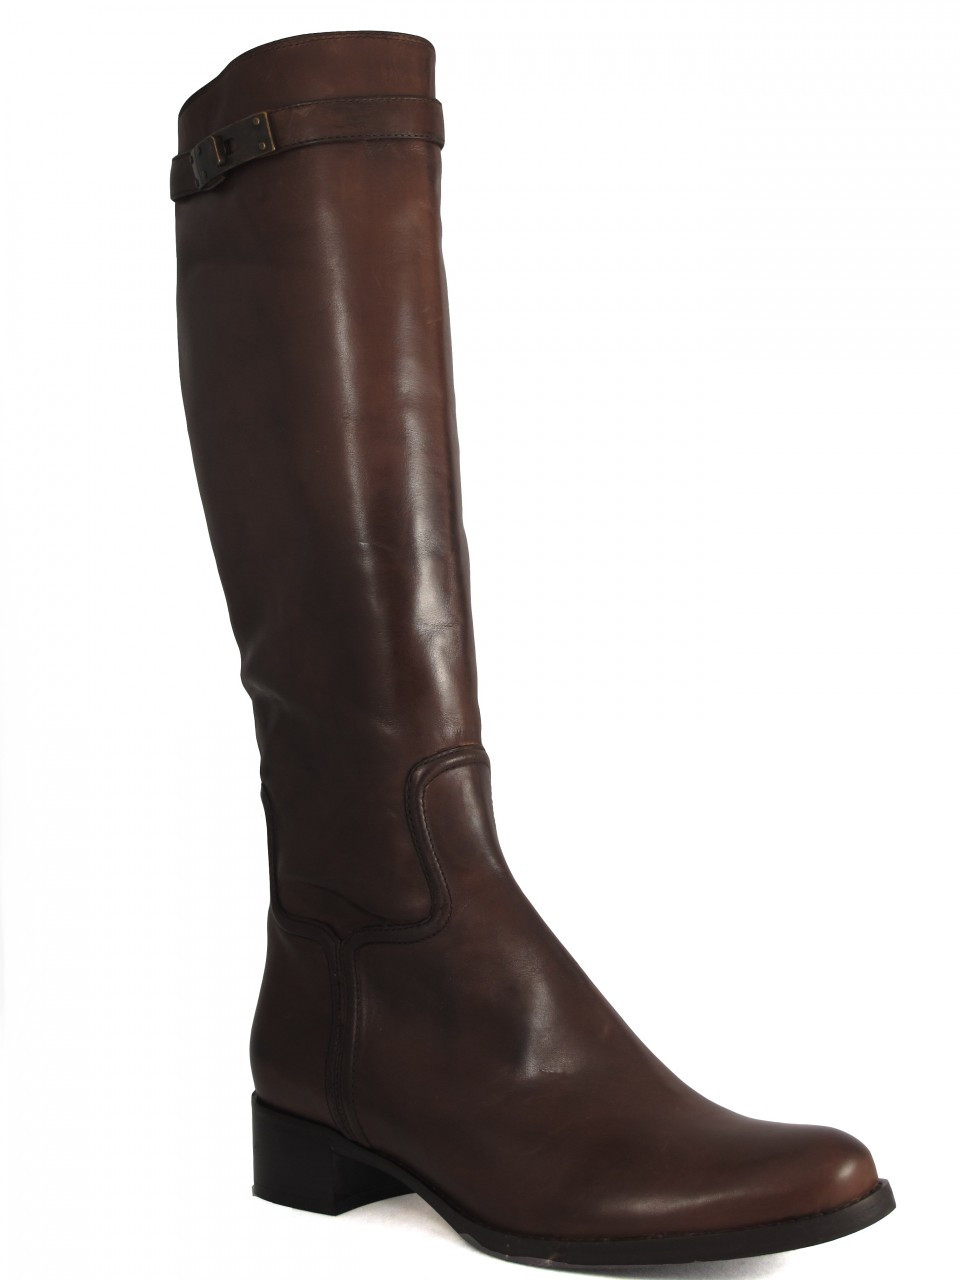 Women's Italian Leather Knee high Flat Boots 670218